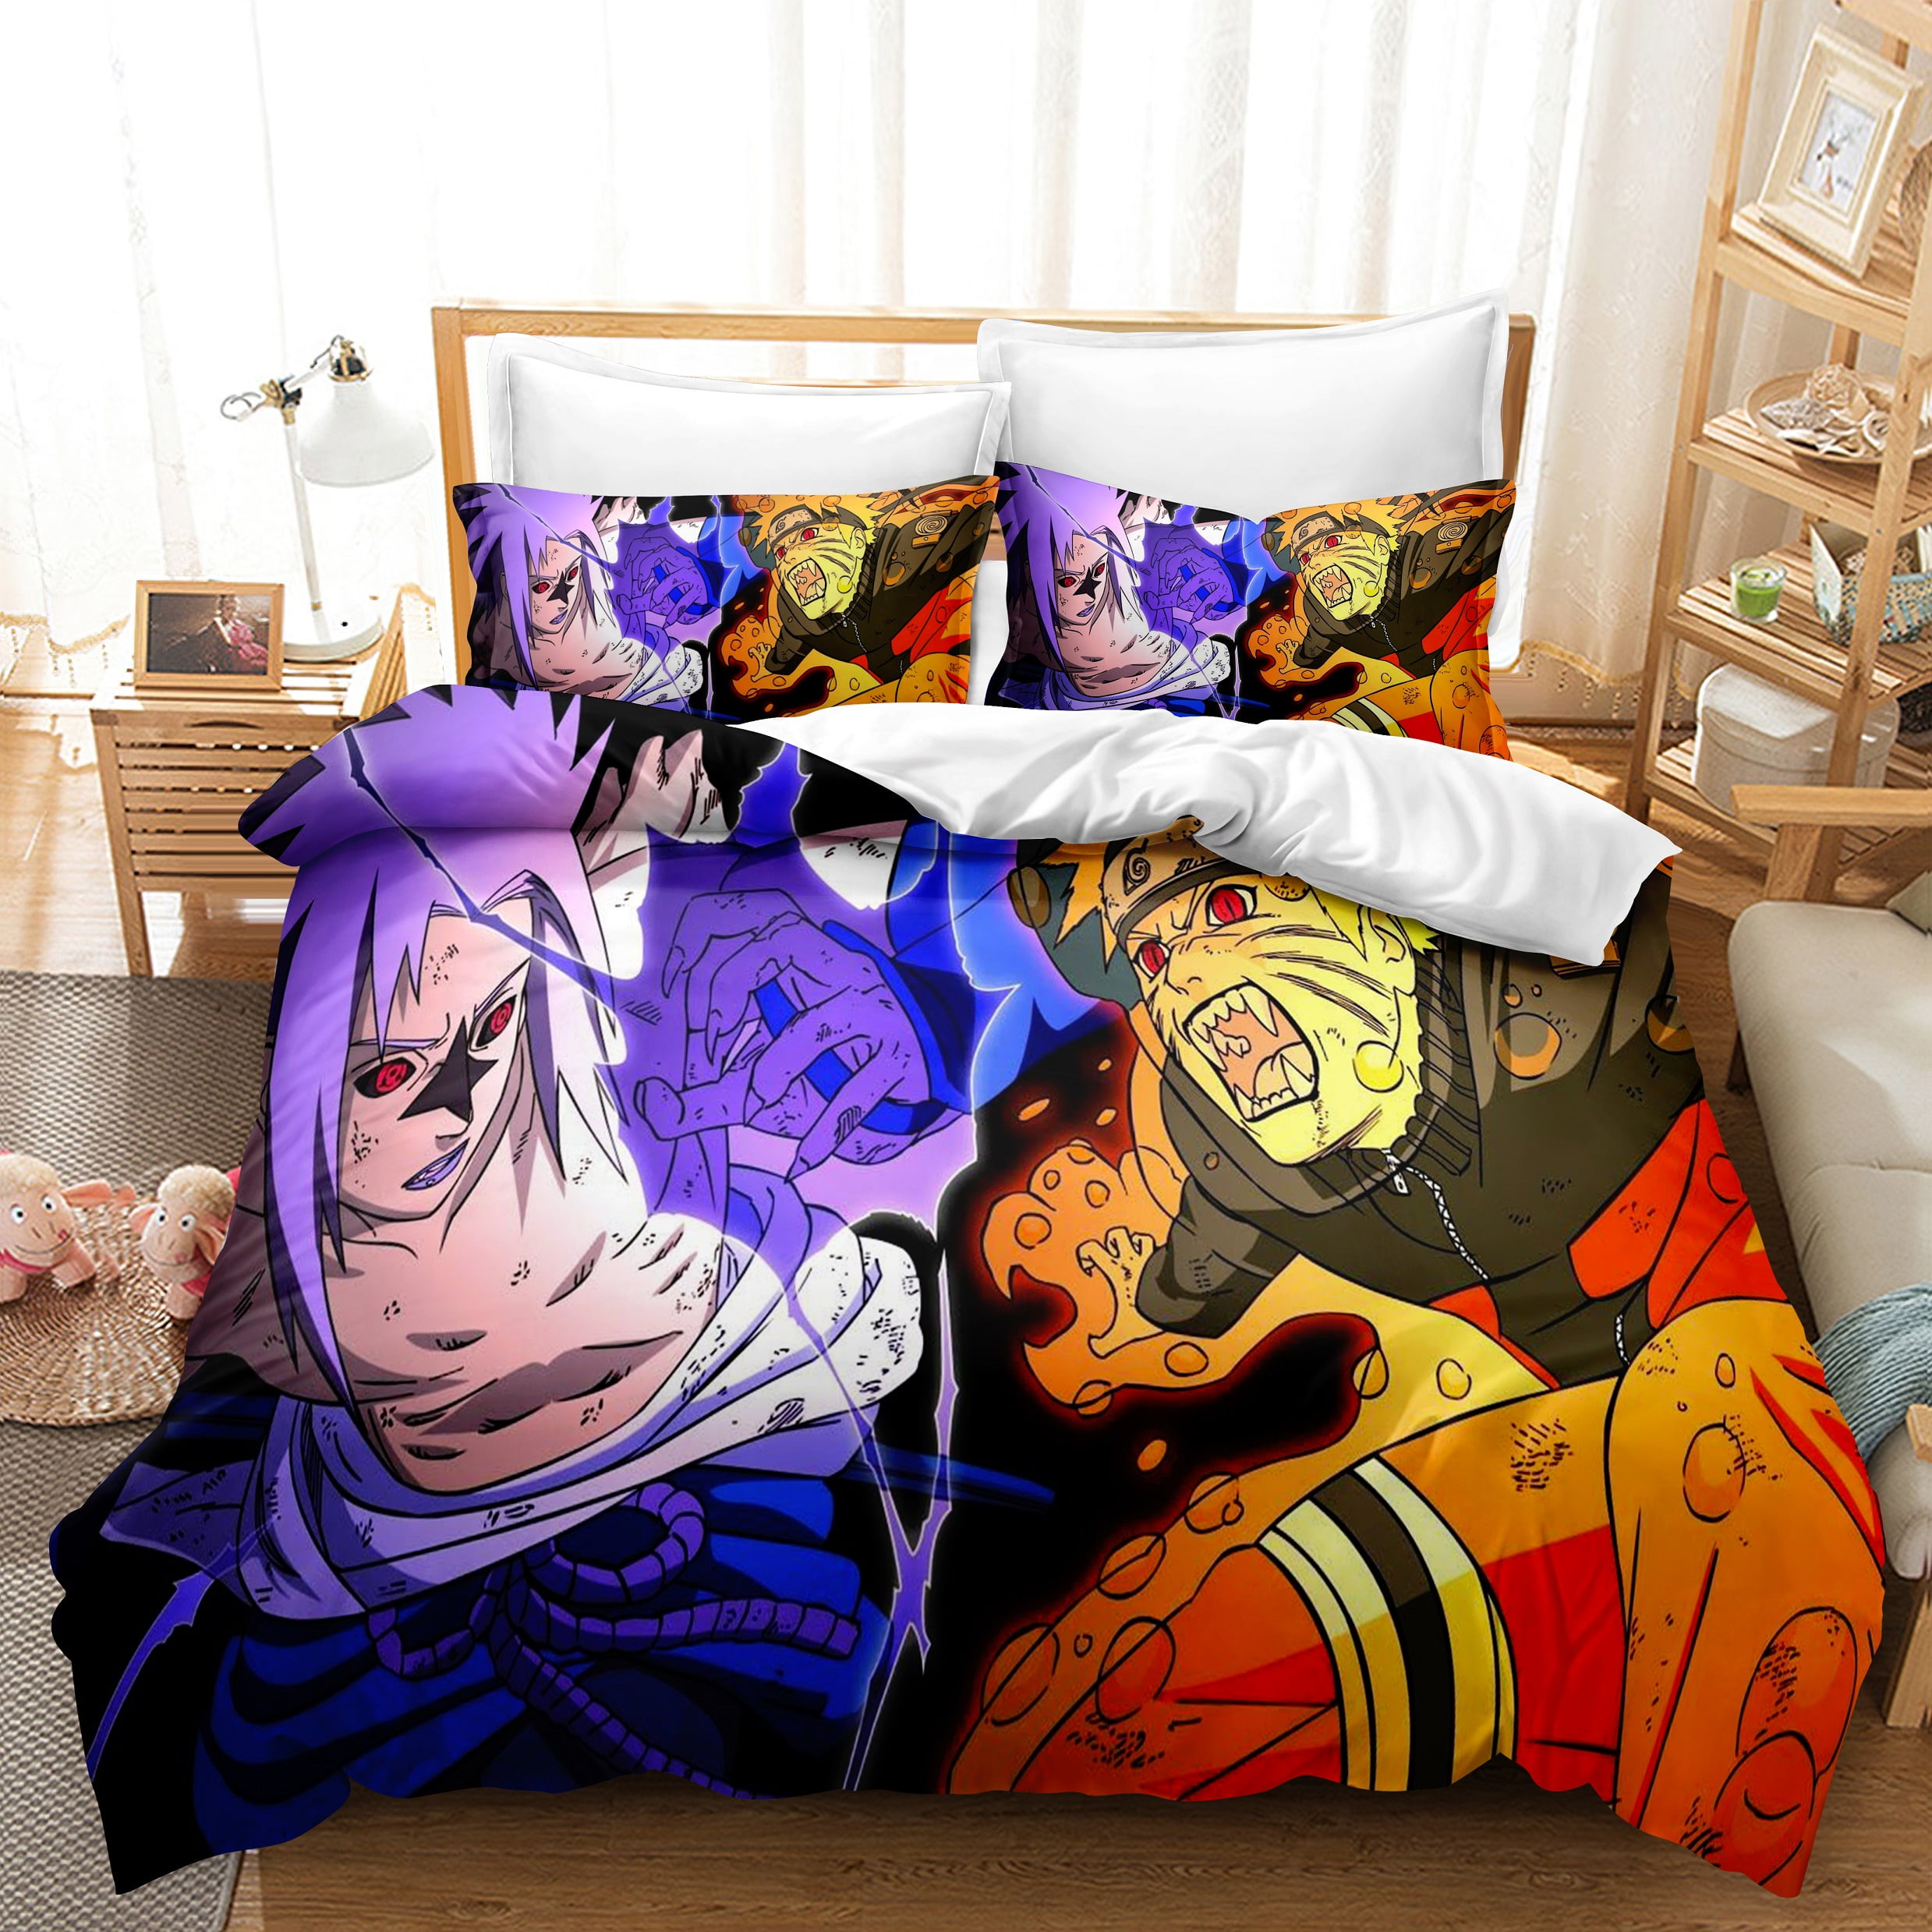 NARUTO0 Design Bedding Set 3PCS Of Duvet Cover Pillowcase Comforter Cover Gifts 